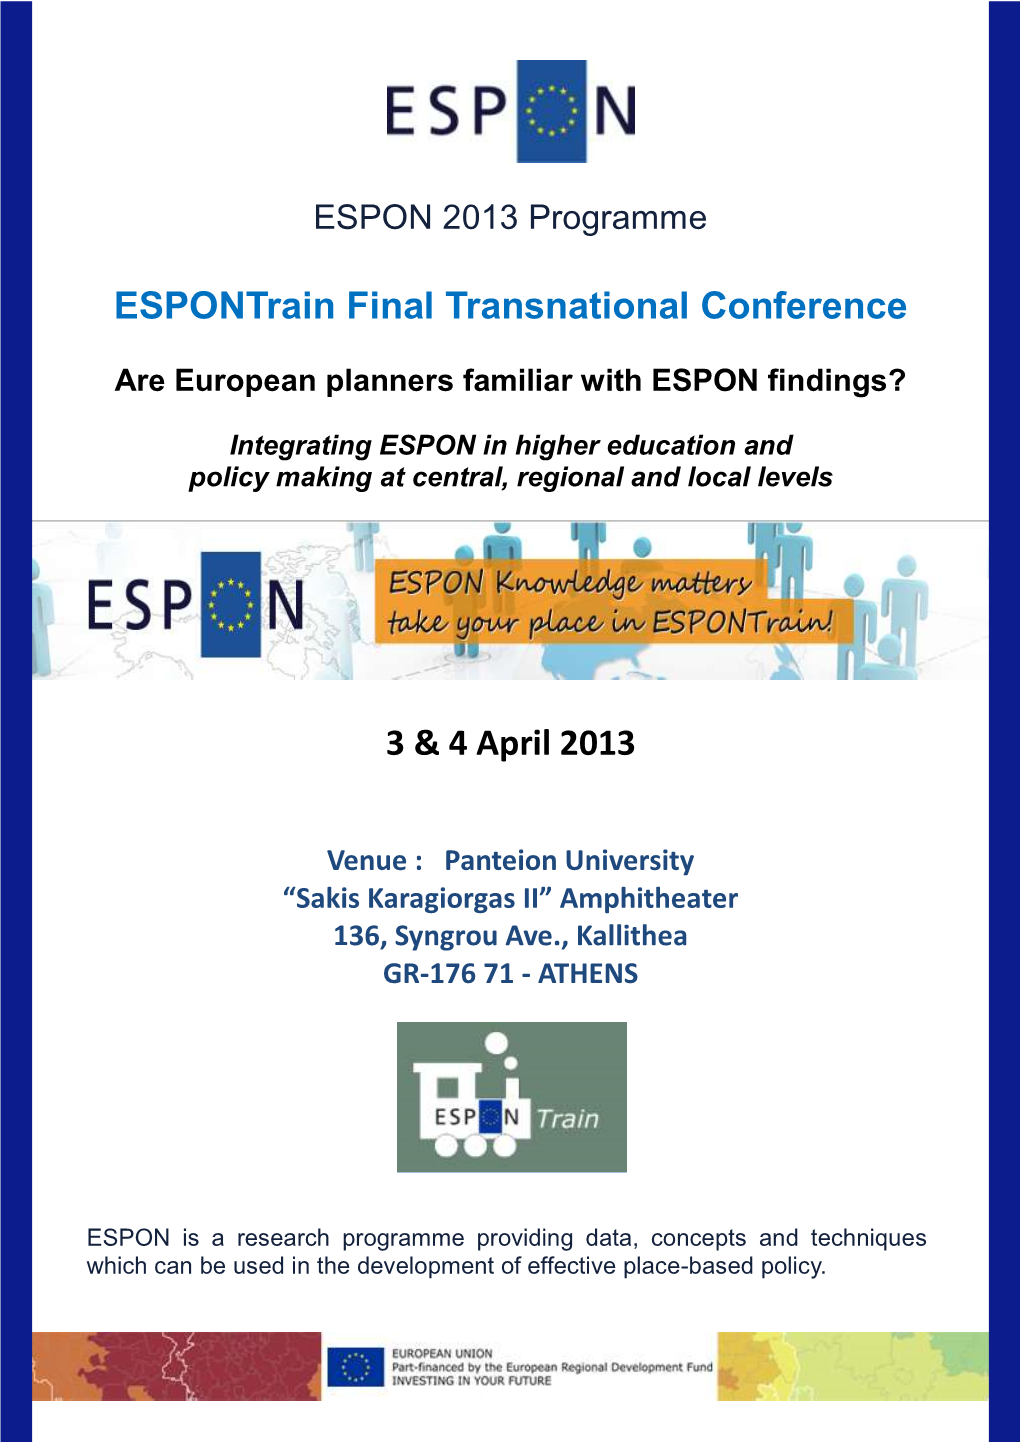 Espontrain Final Transnational Conference 3 & 4 April 2013